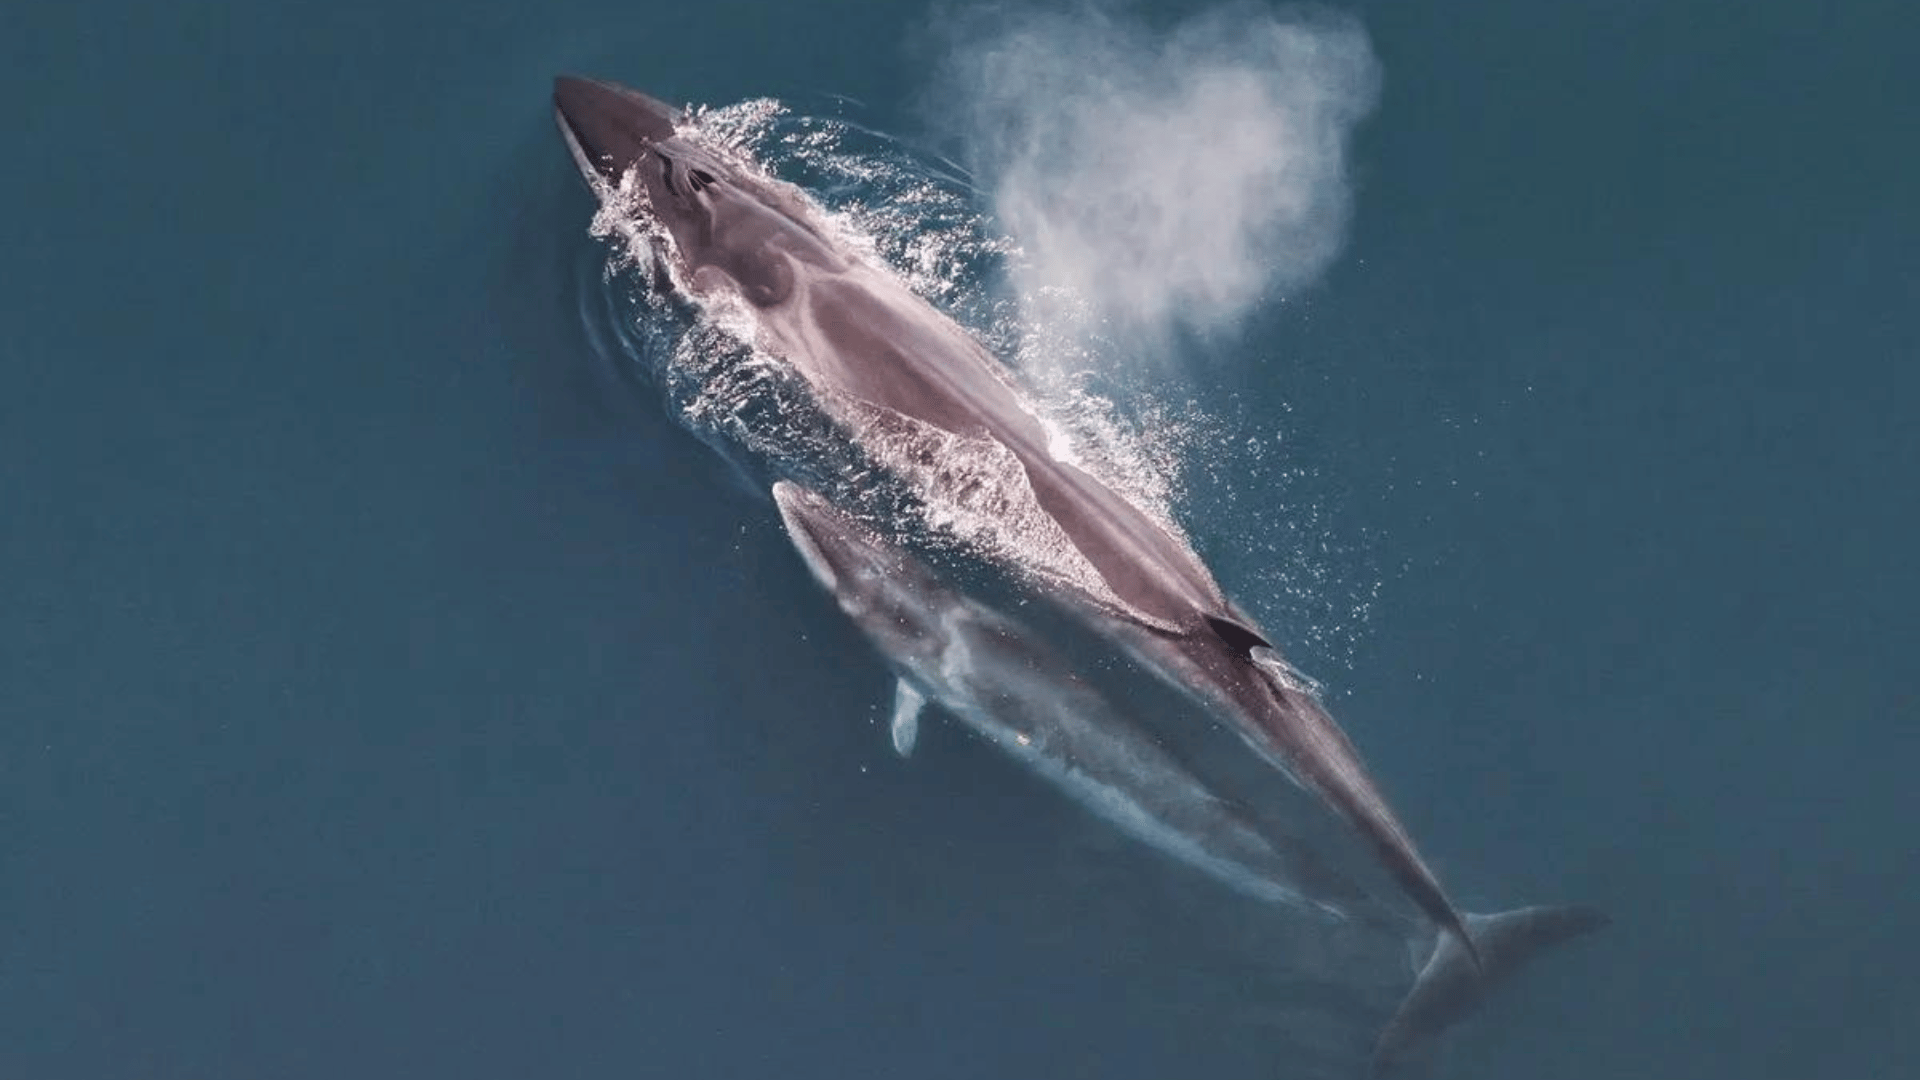 Endangered sei whales were amongst the observations made. Image credit: Christin Khan, NOAA:NEFSC via Wikimedia Commons